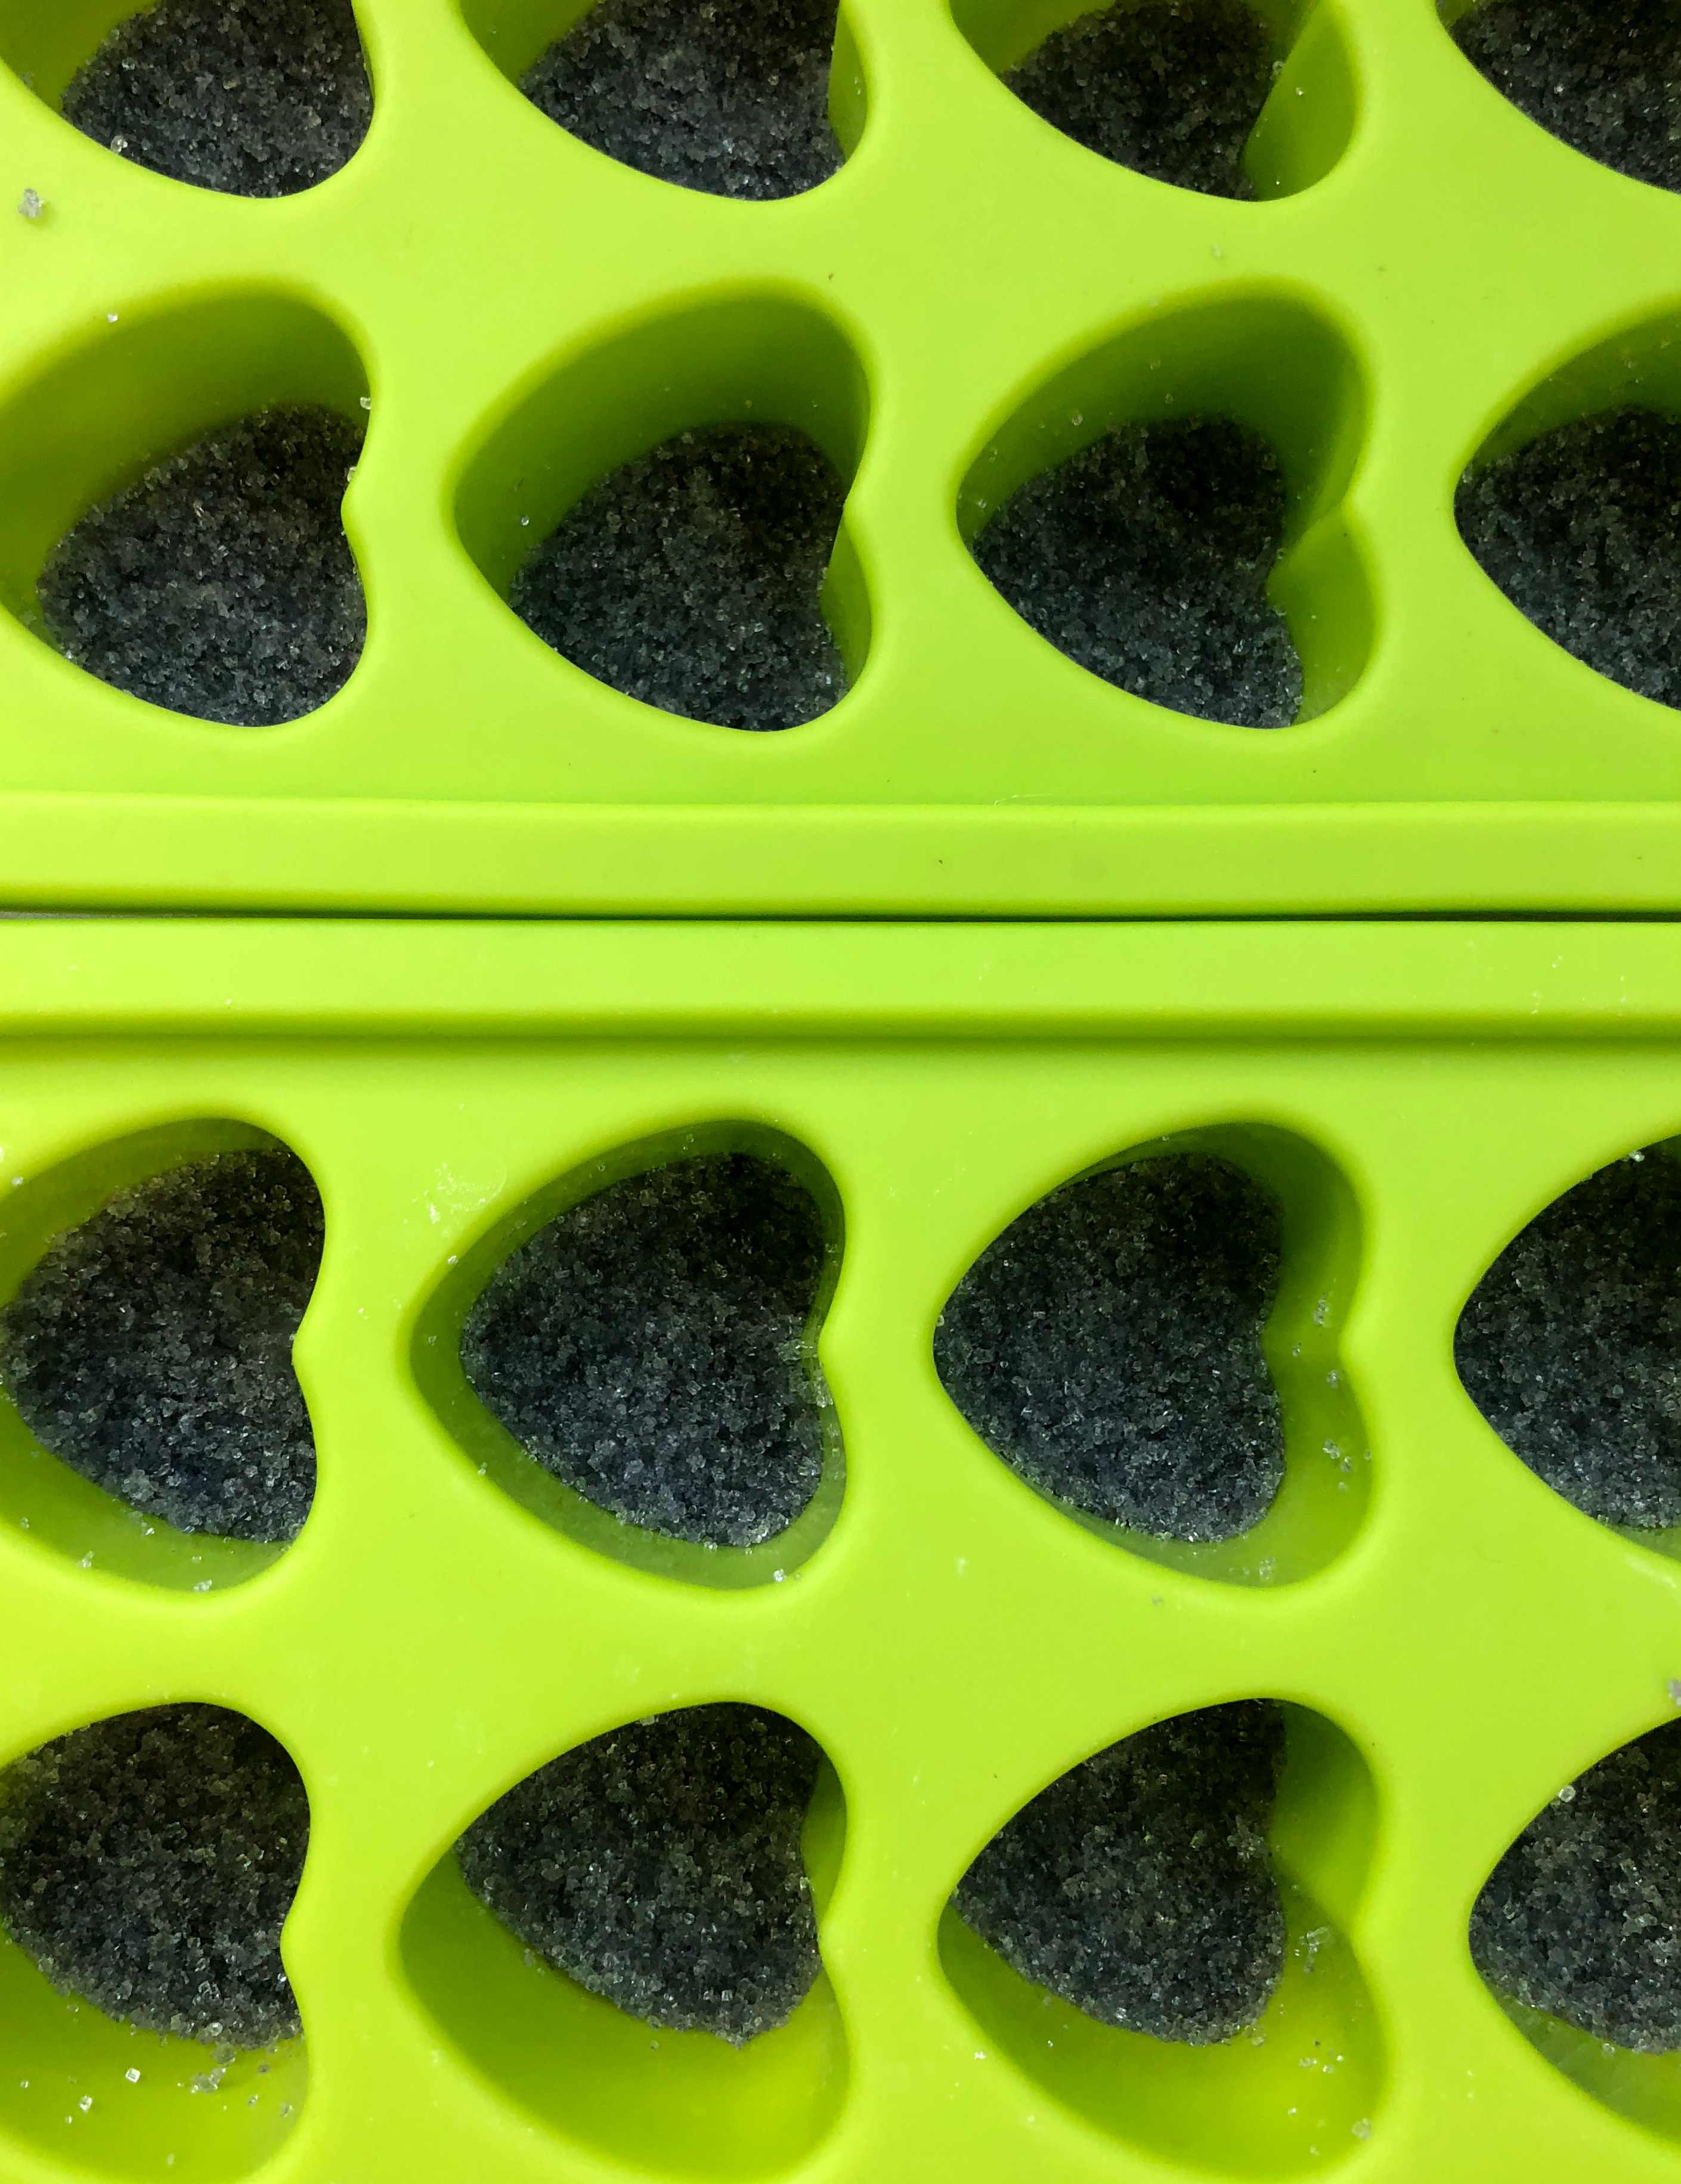 DIY vegan purple sugar cubes